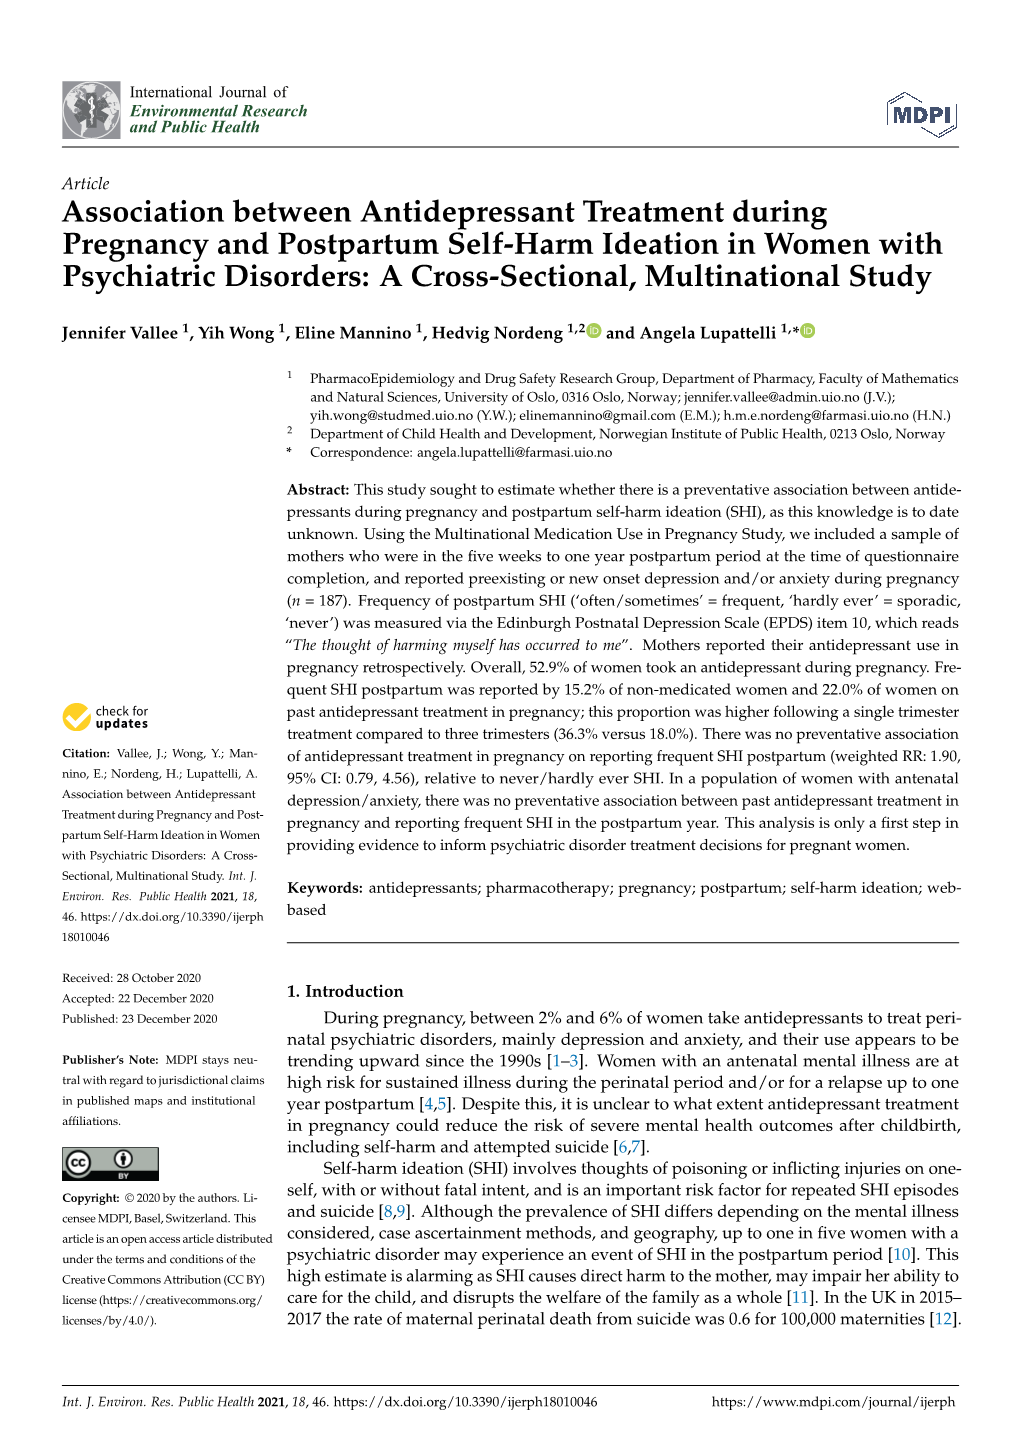 Association Between Antidepressant Treatment During Pregnancy